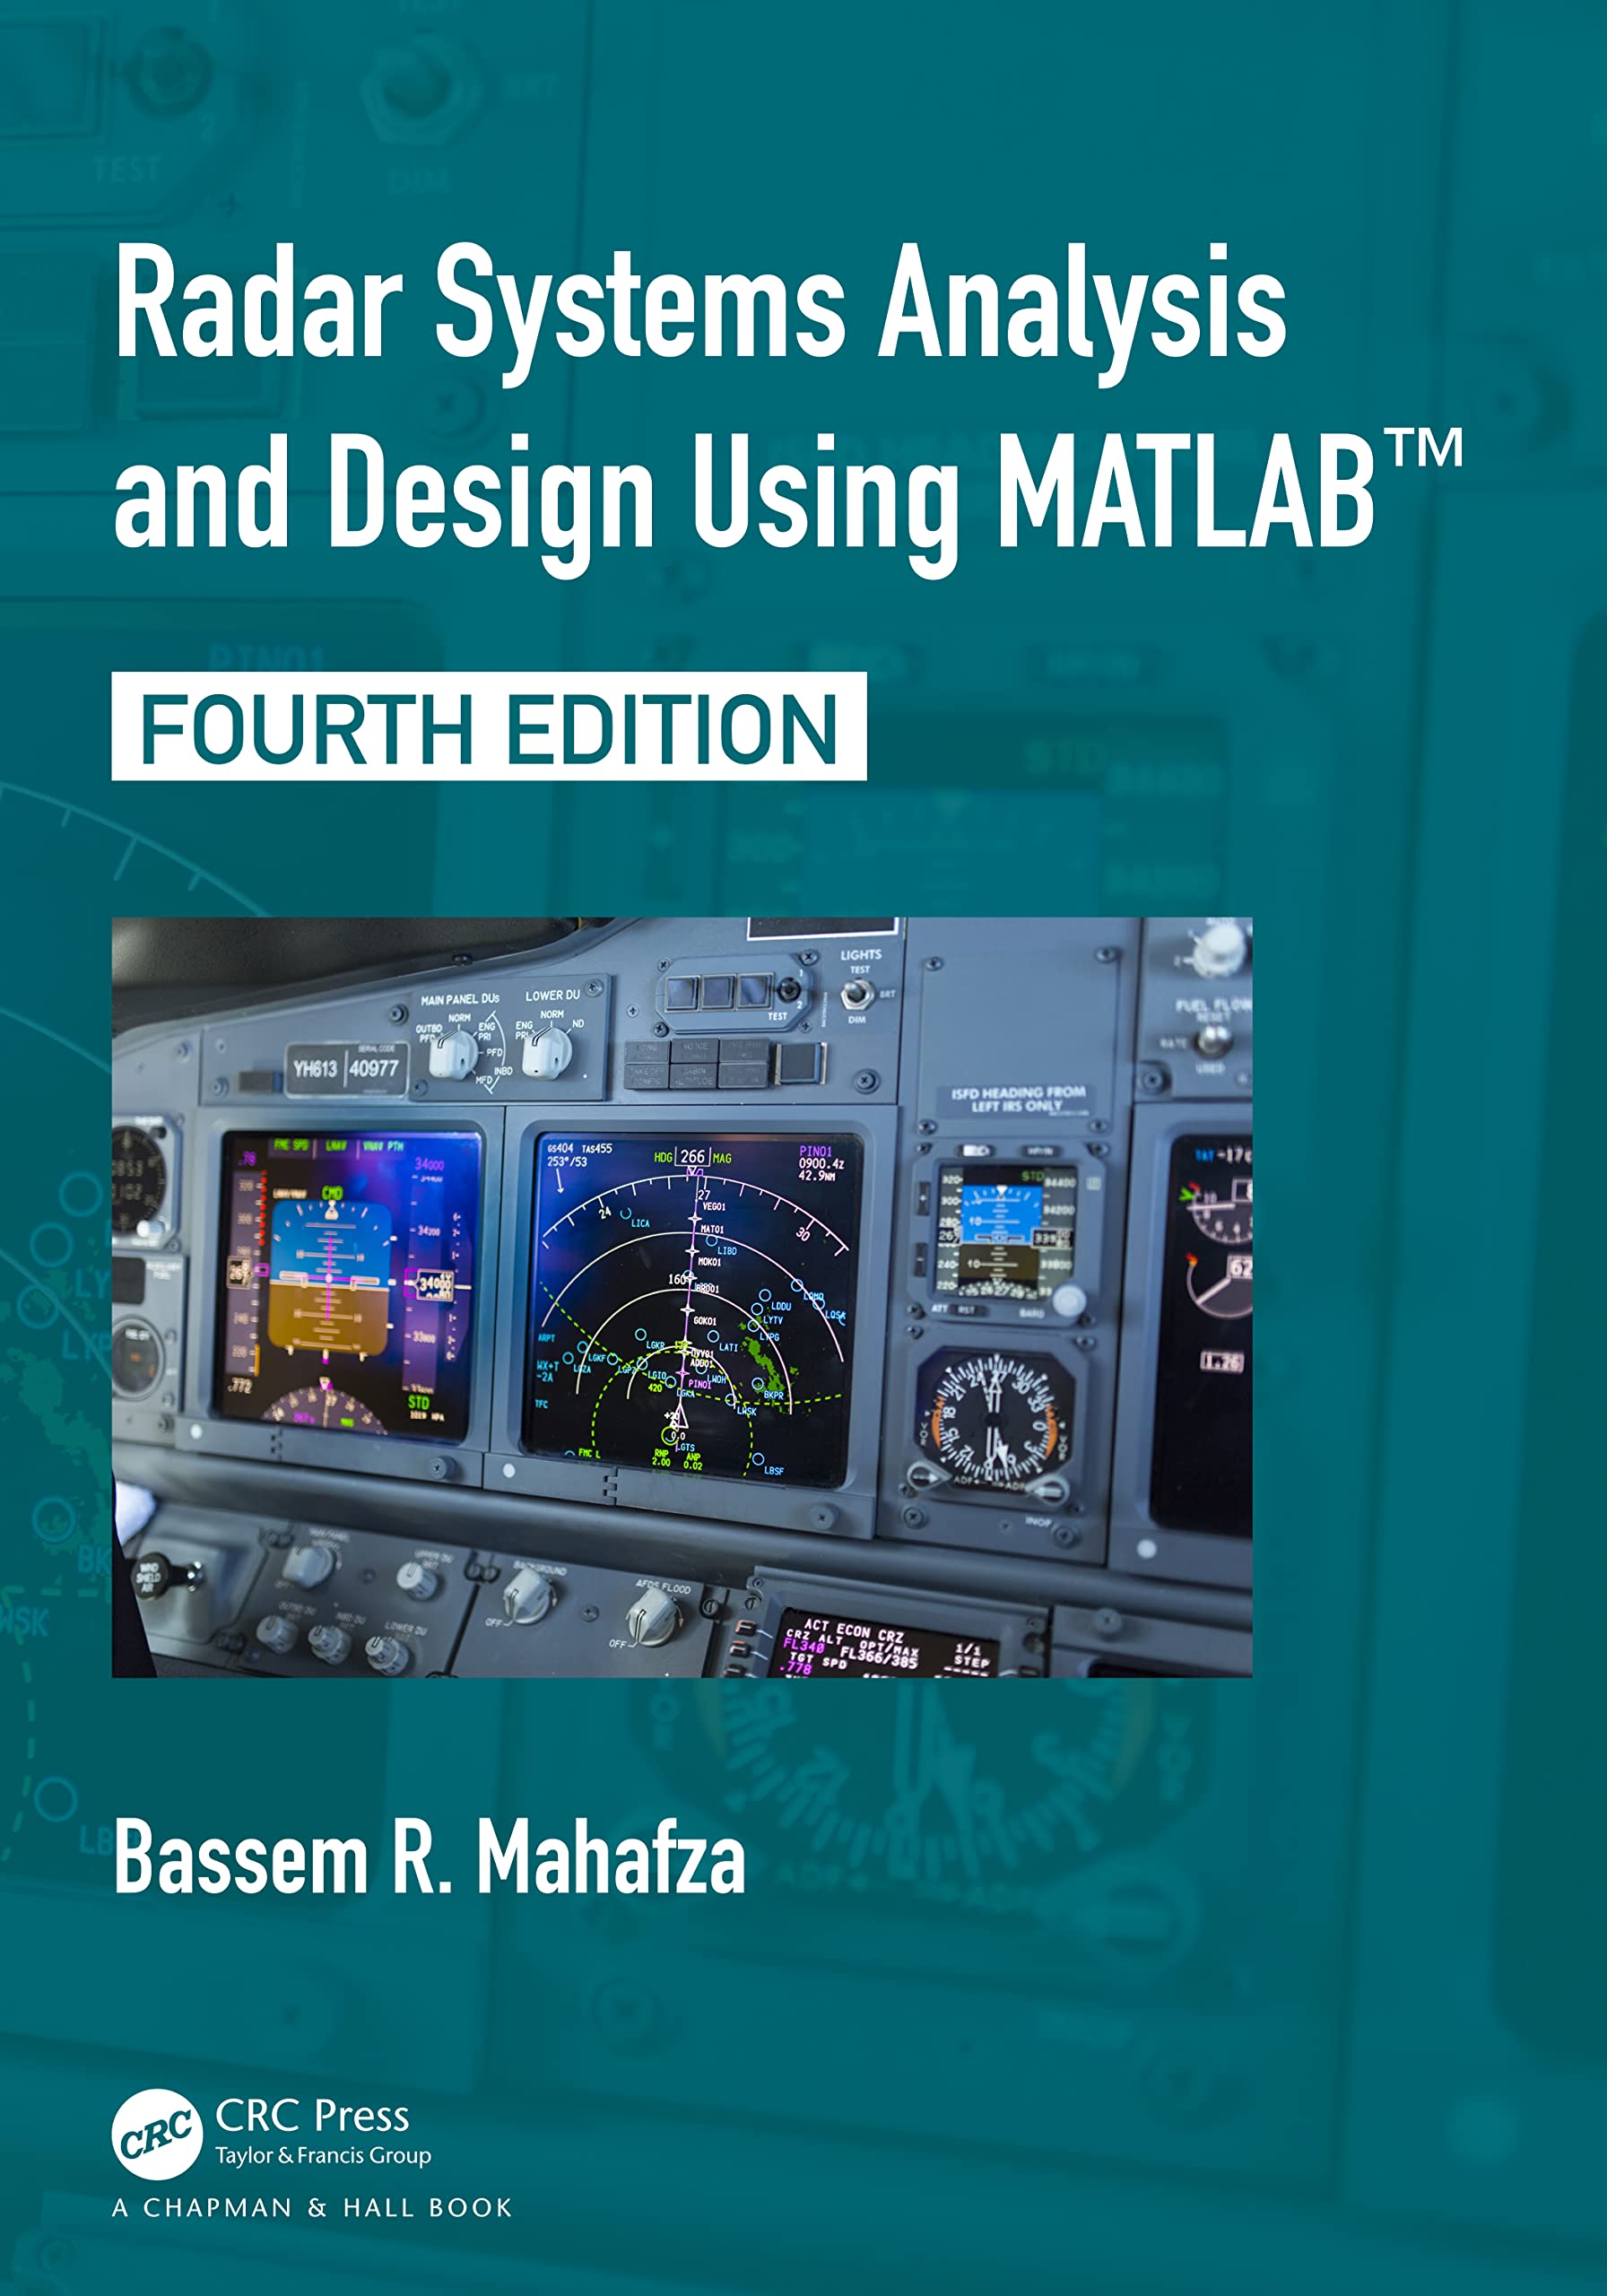 Mua Radar Systems Analysis and Design Using MATLAB trên Amazon Mỹ chính